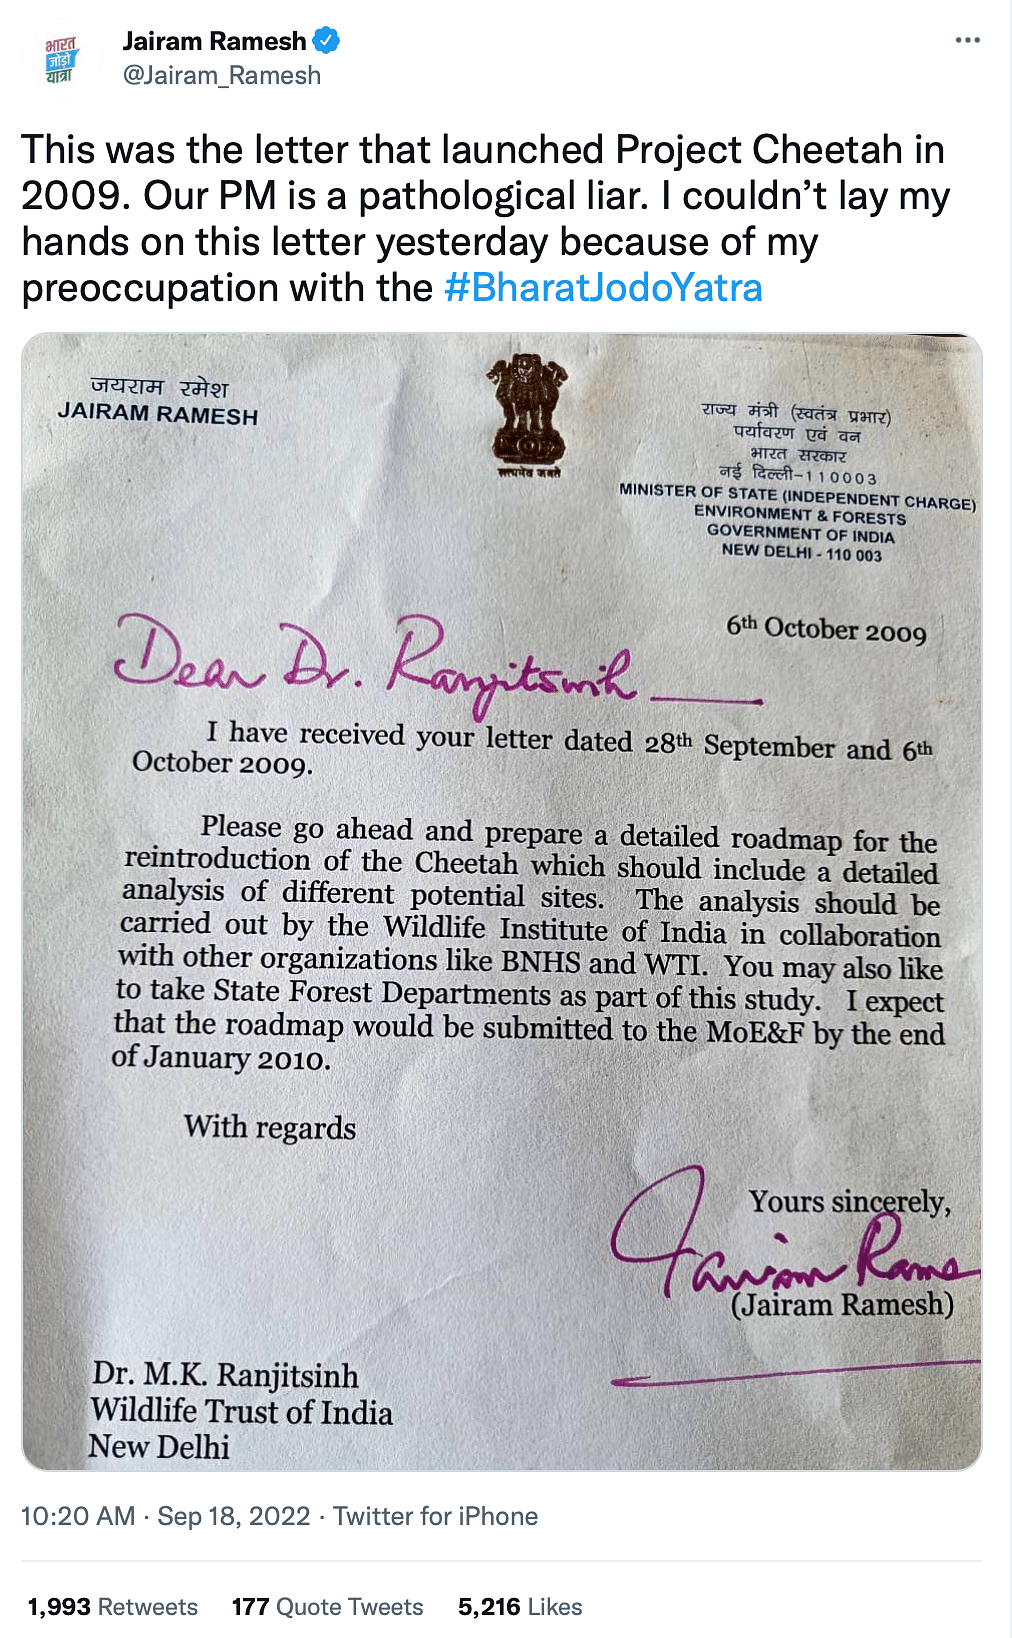 Former Environment Minister Jairam Ramesh shared a letter from 2009, of an approve project cheetah.